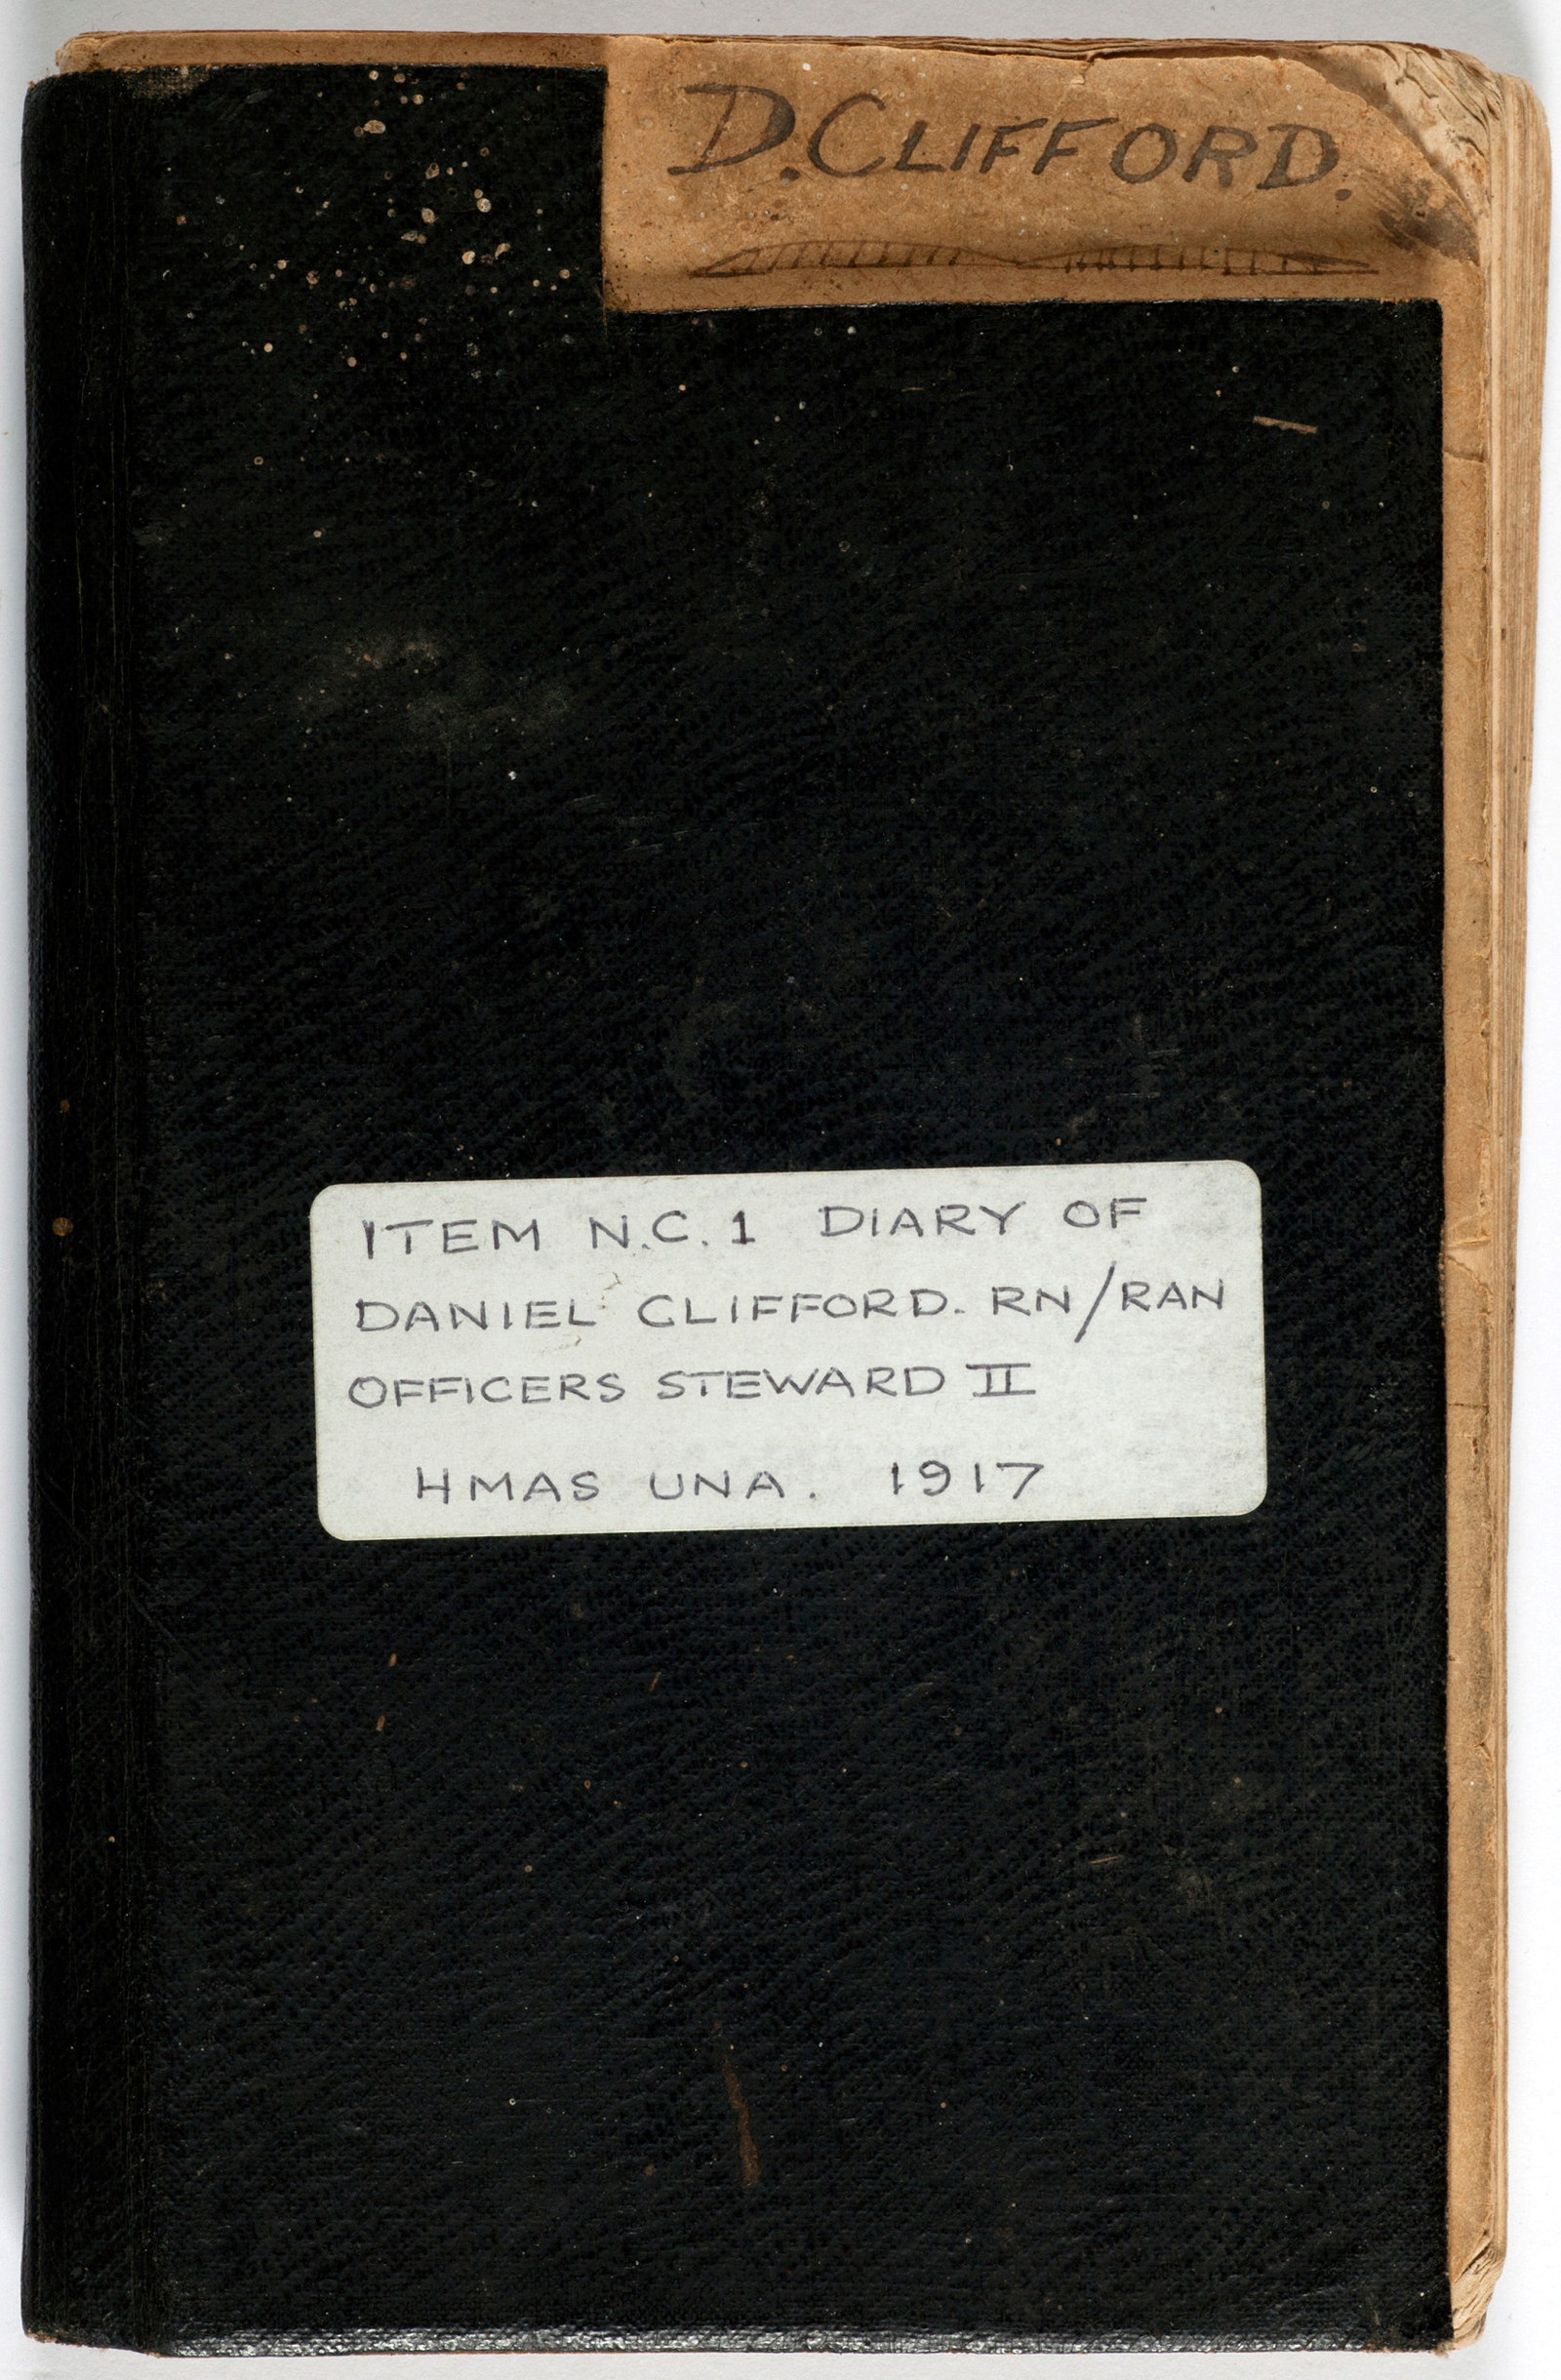 Diary of Daniiel Clifford RN/RAN, Officers Steward II, HMAS Una, 1917